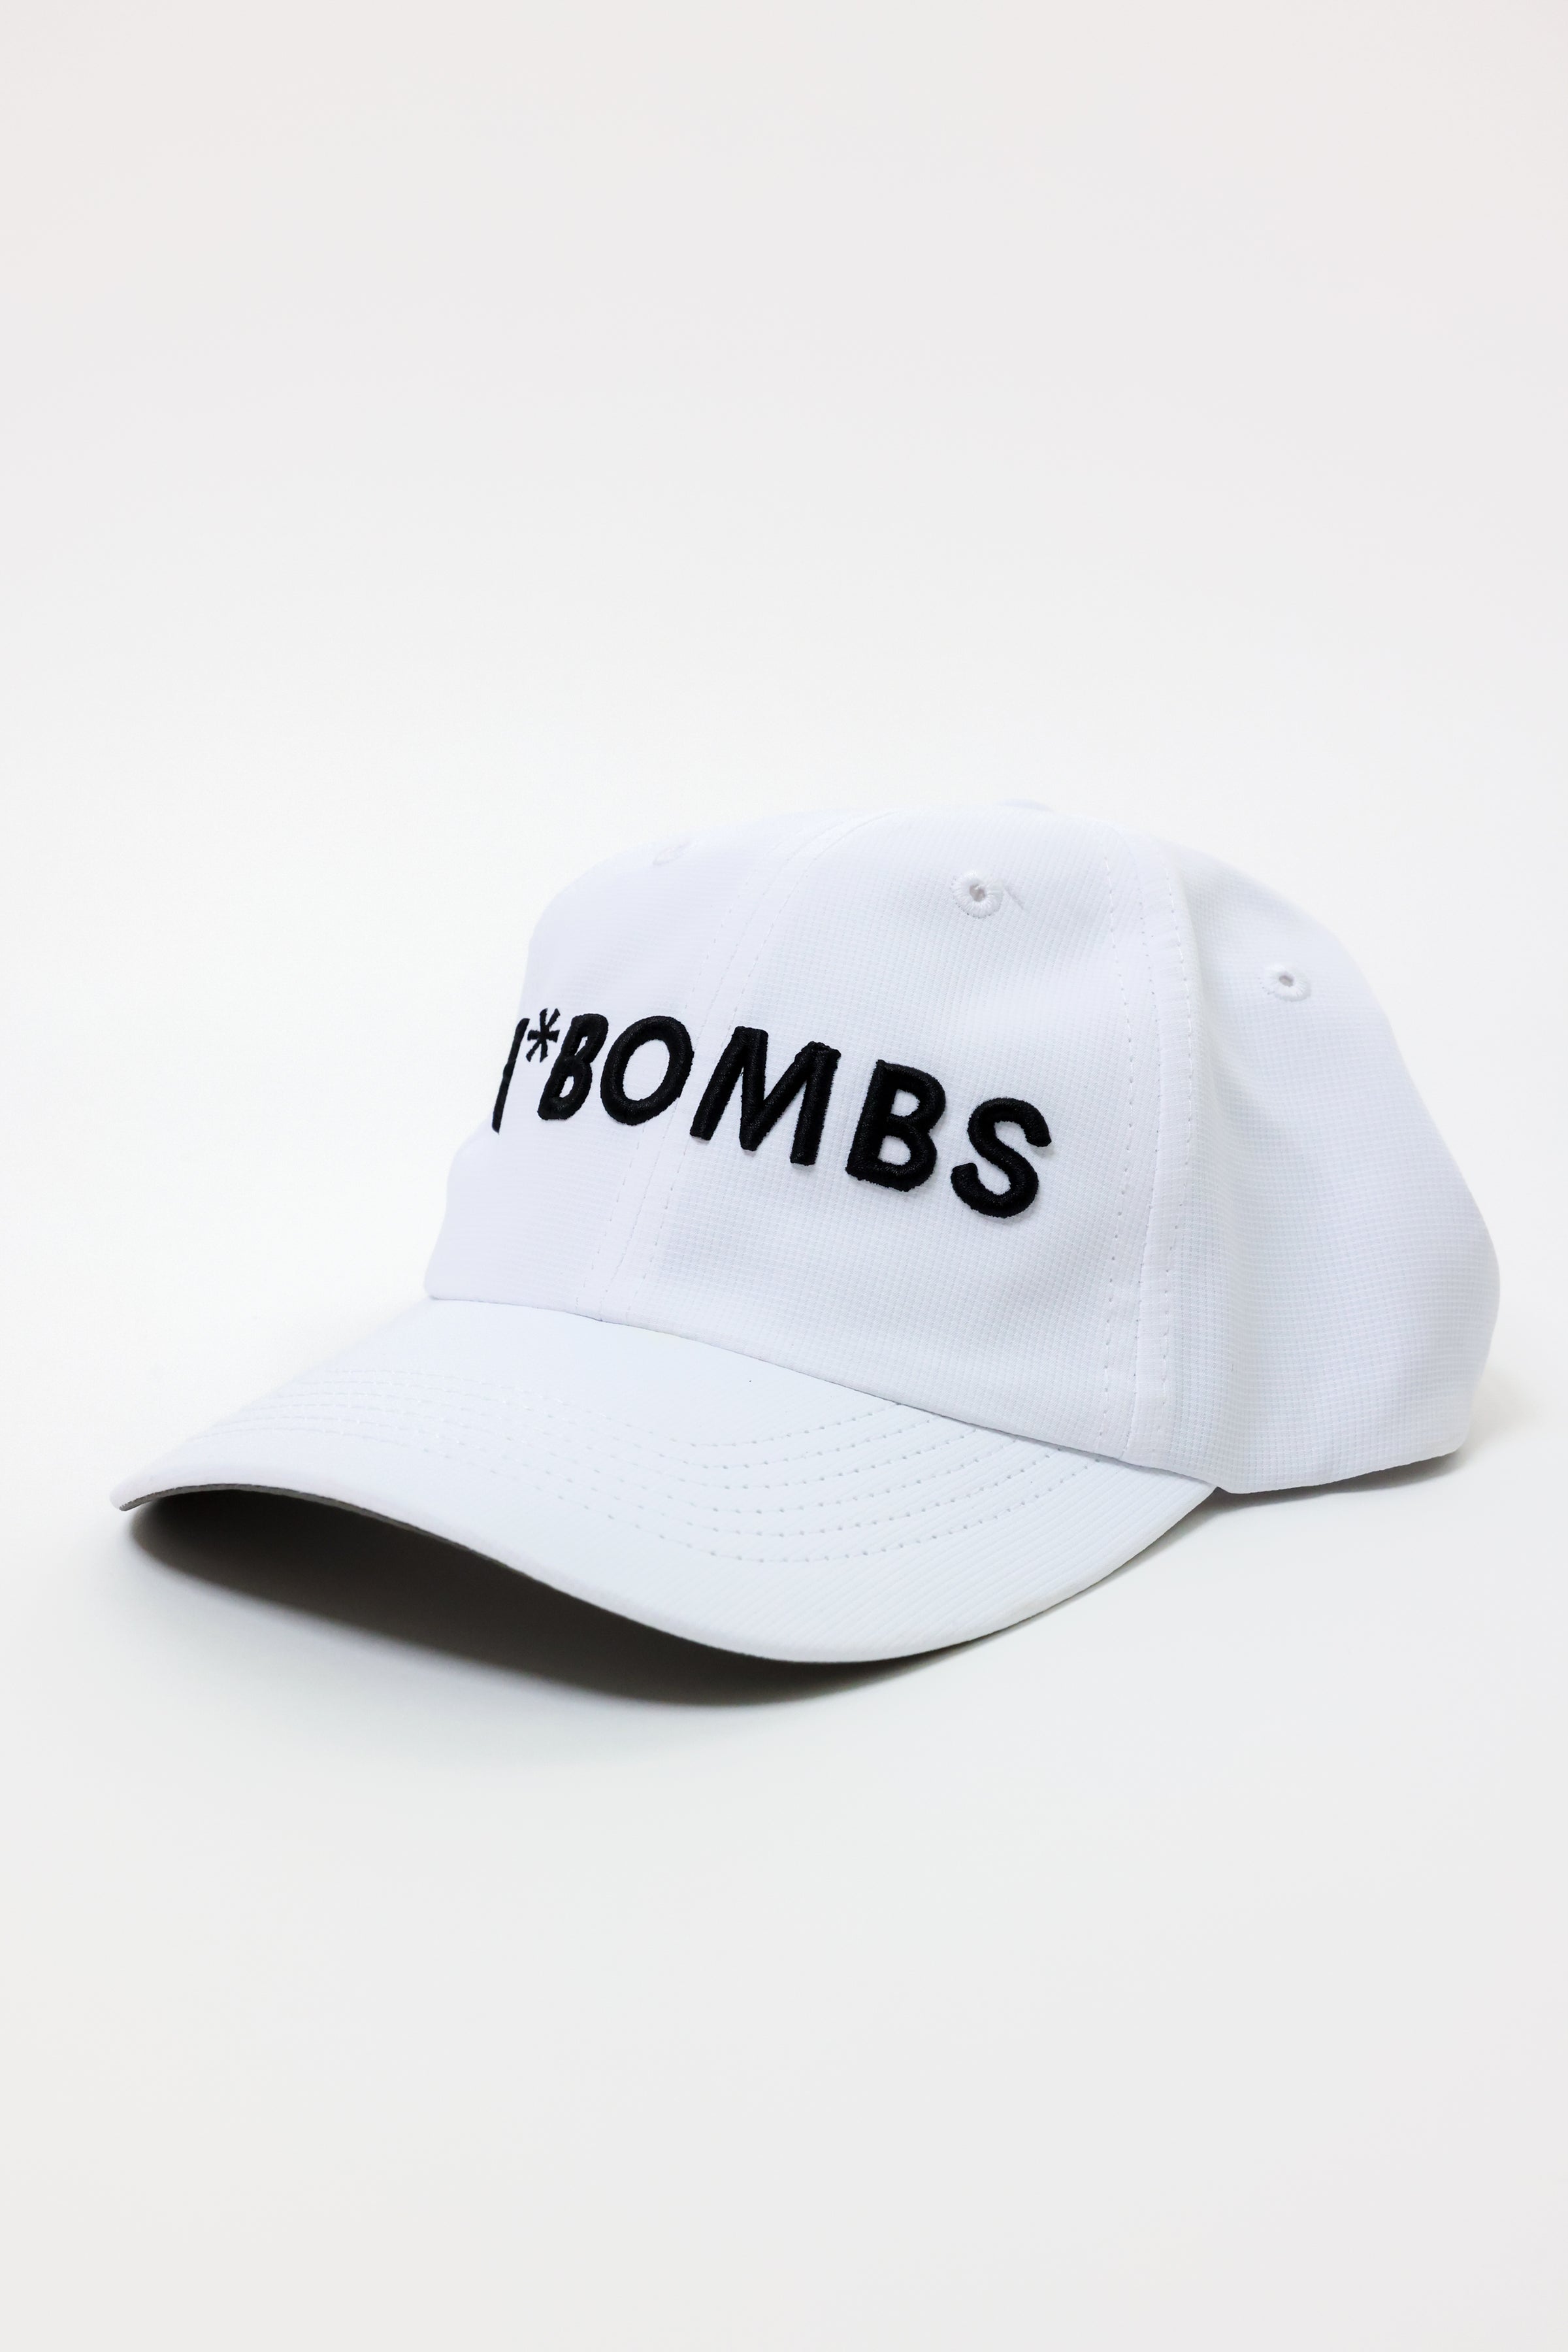 F*BOMBS True Fit Unisex Hat